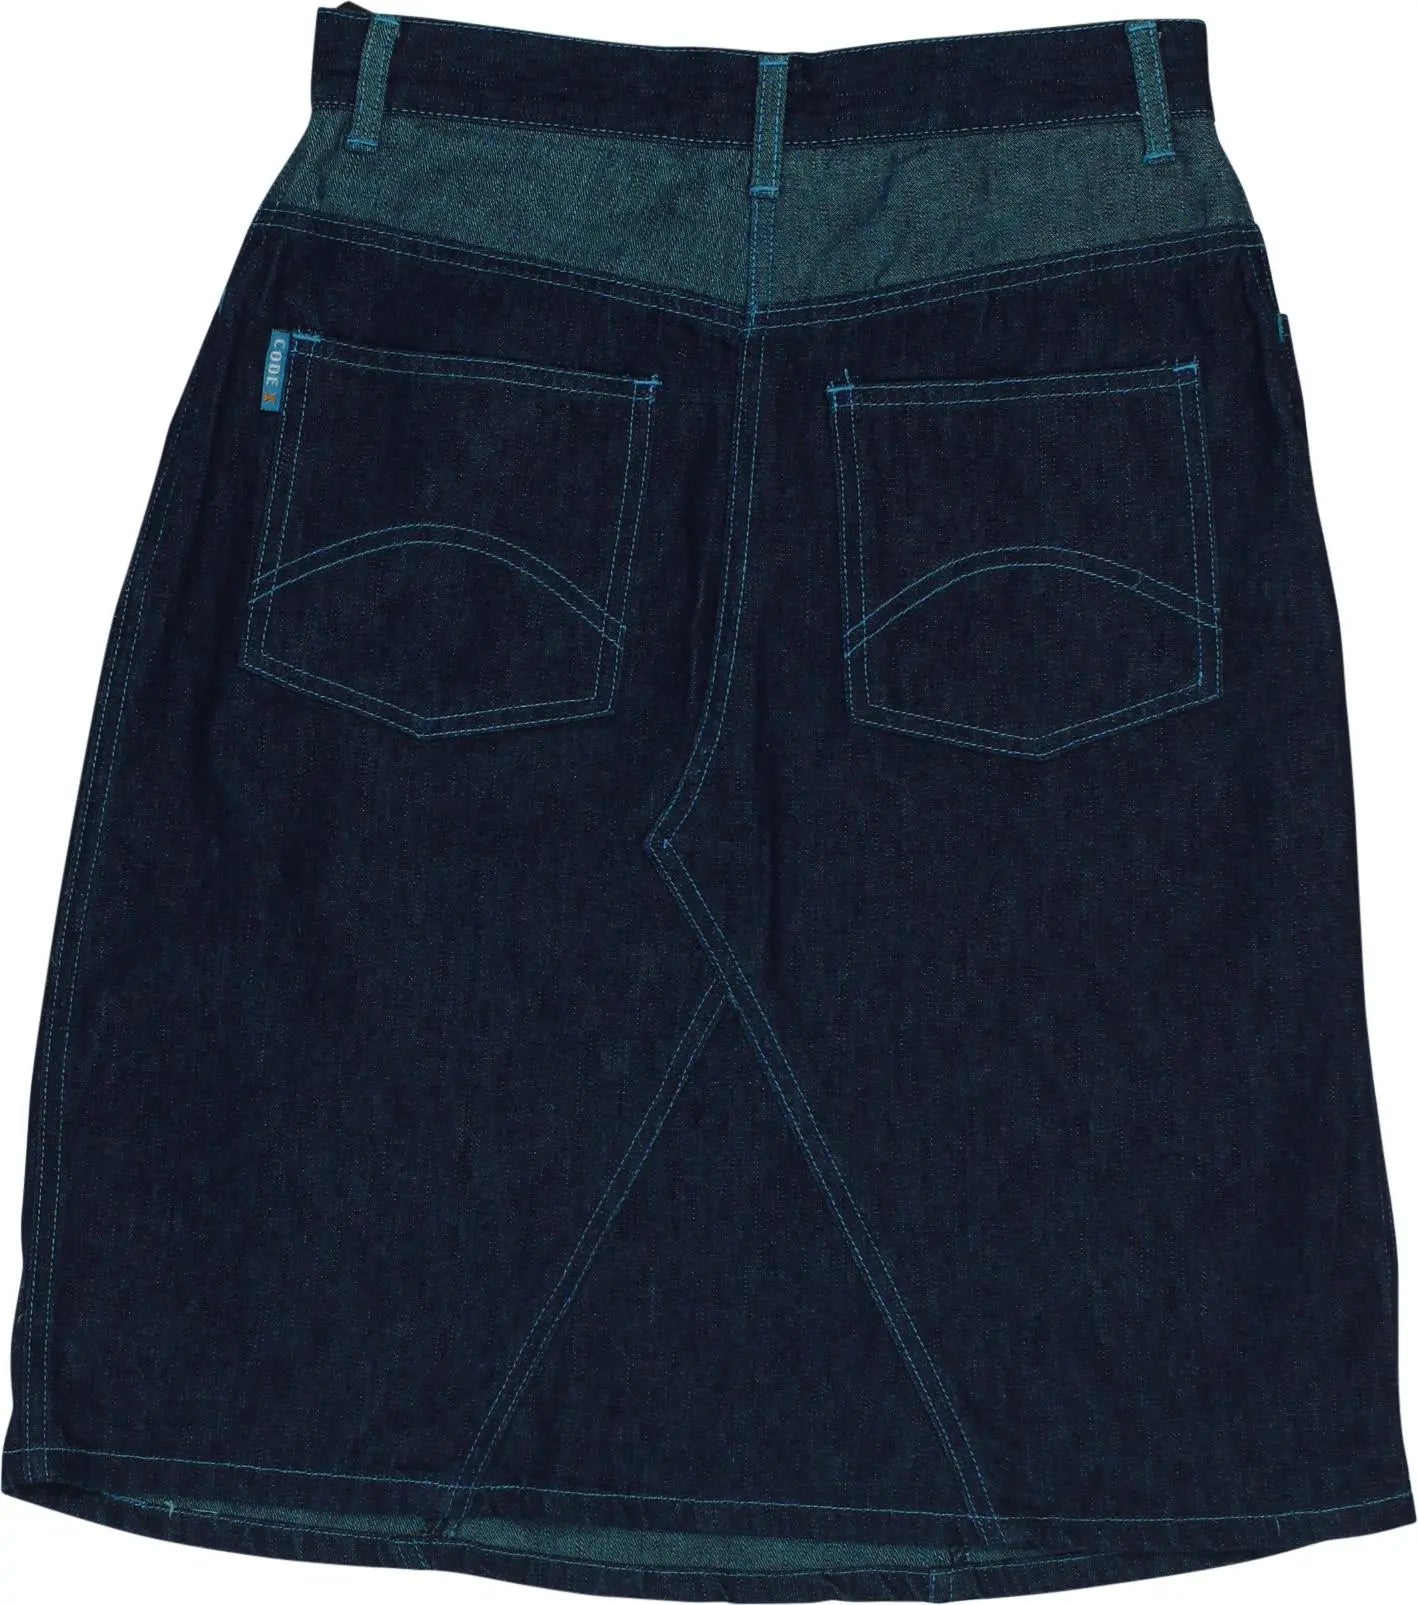 Vroom & Dreesman - Denim skirt- ThriftTale.com - Vintage and second handclothing